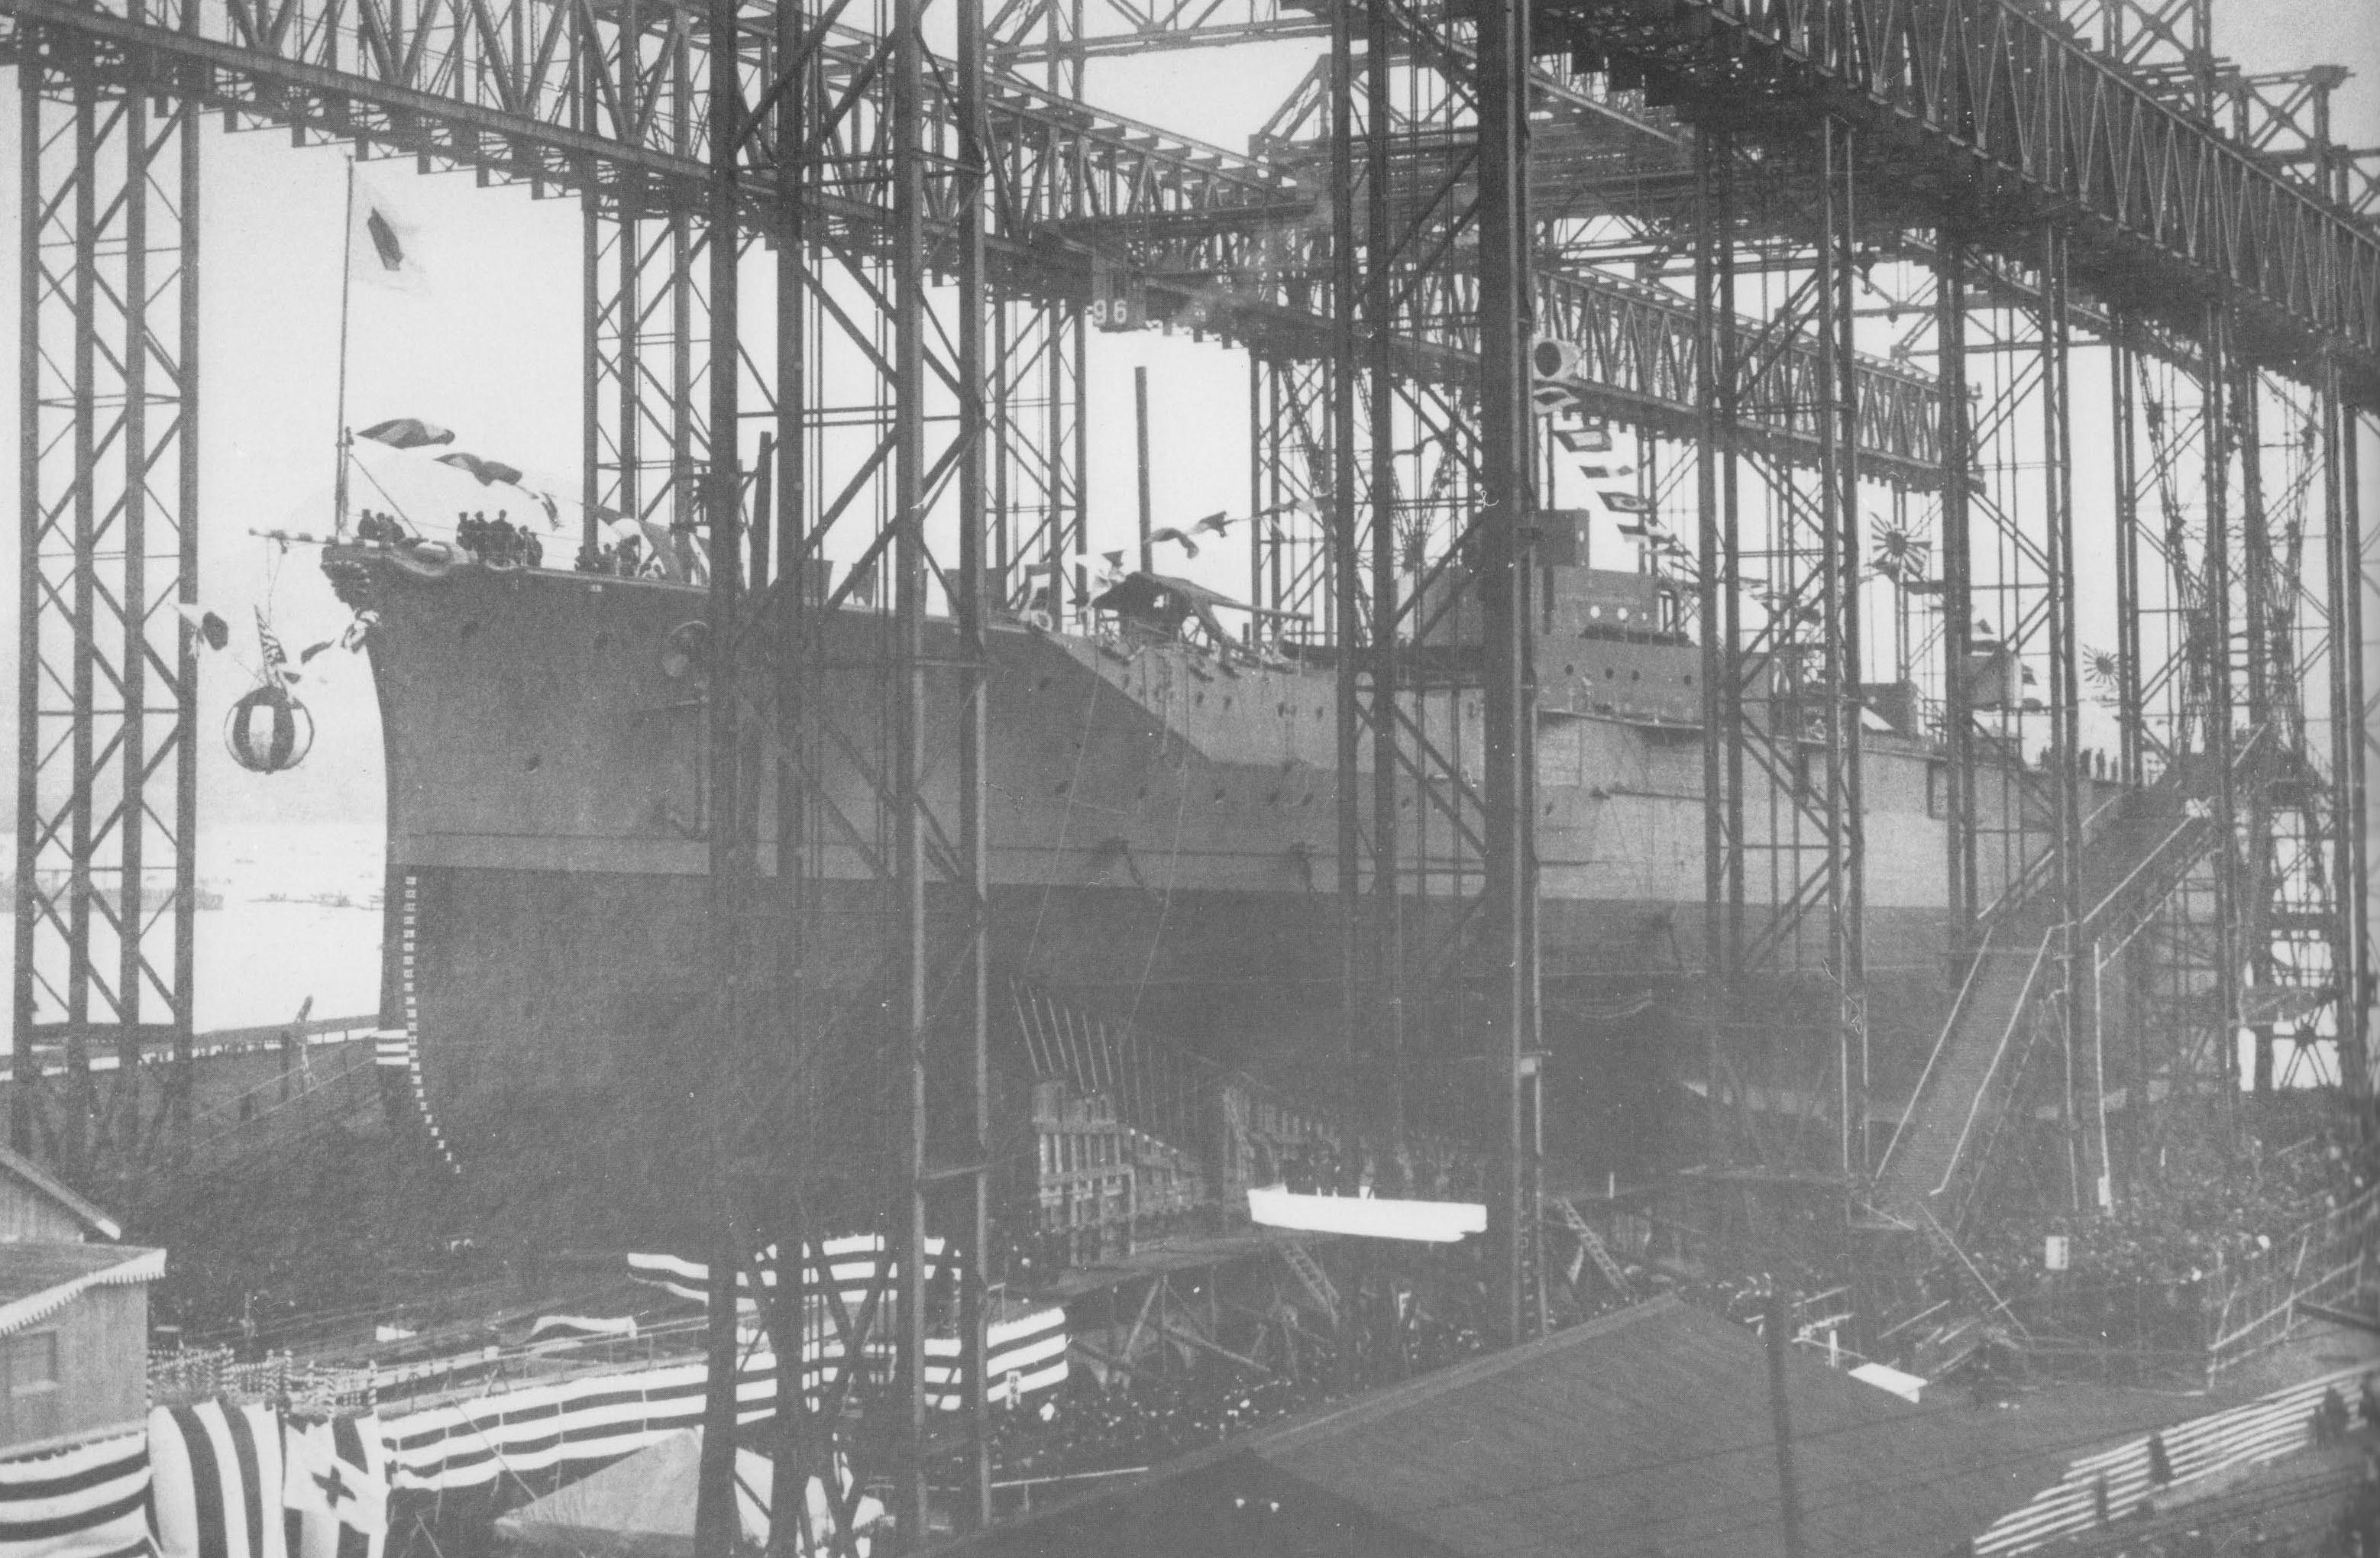 The launching of battlecruiser Kirishima at the Mitsubishi Naval Shipyard in Nagasaki, Japan, 1 Dec 1913